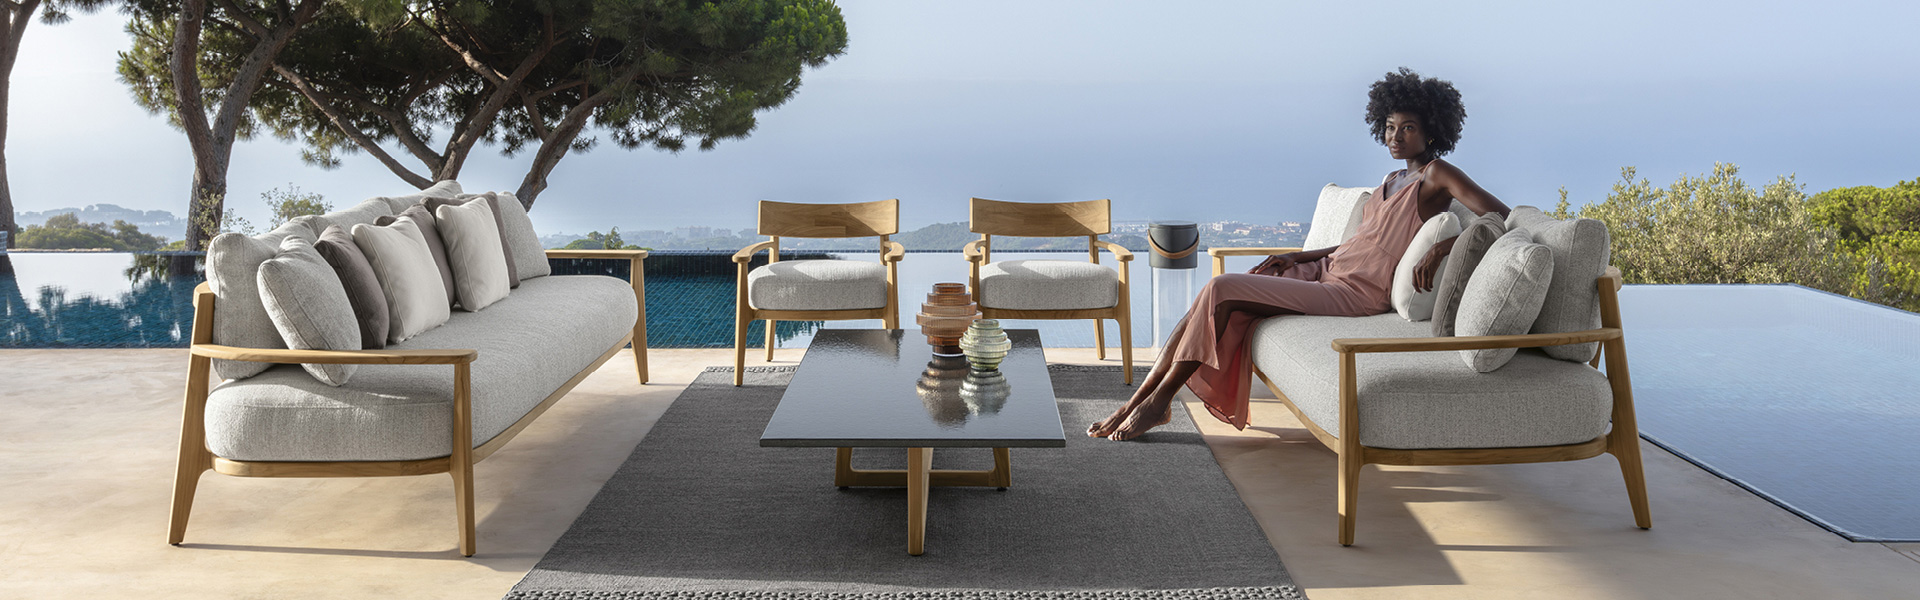 Canapé de jardin haut de gamme design italien TALENTI Chez Ksl Living